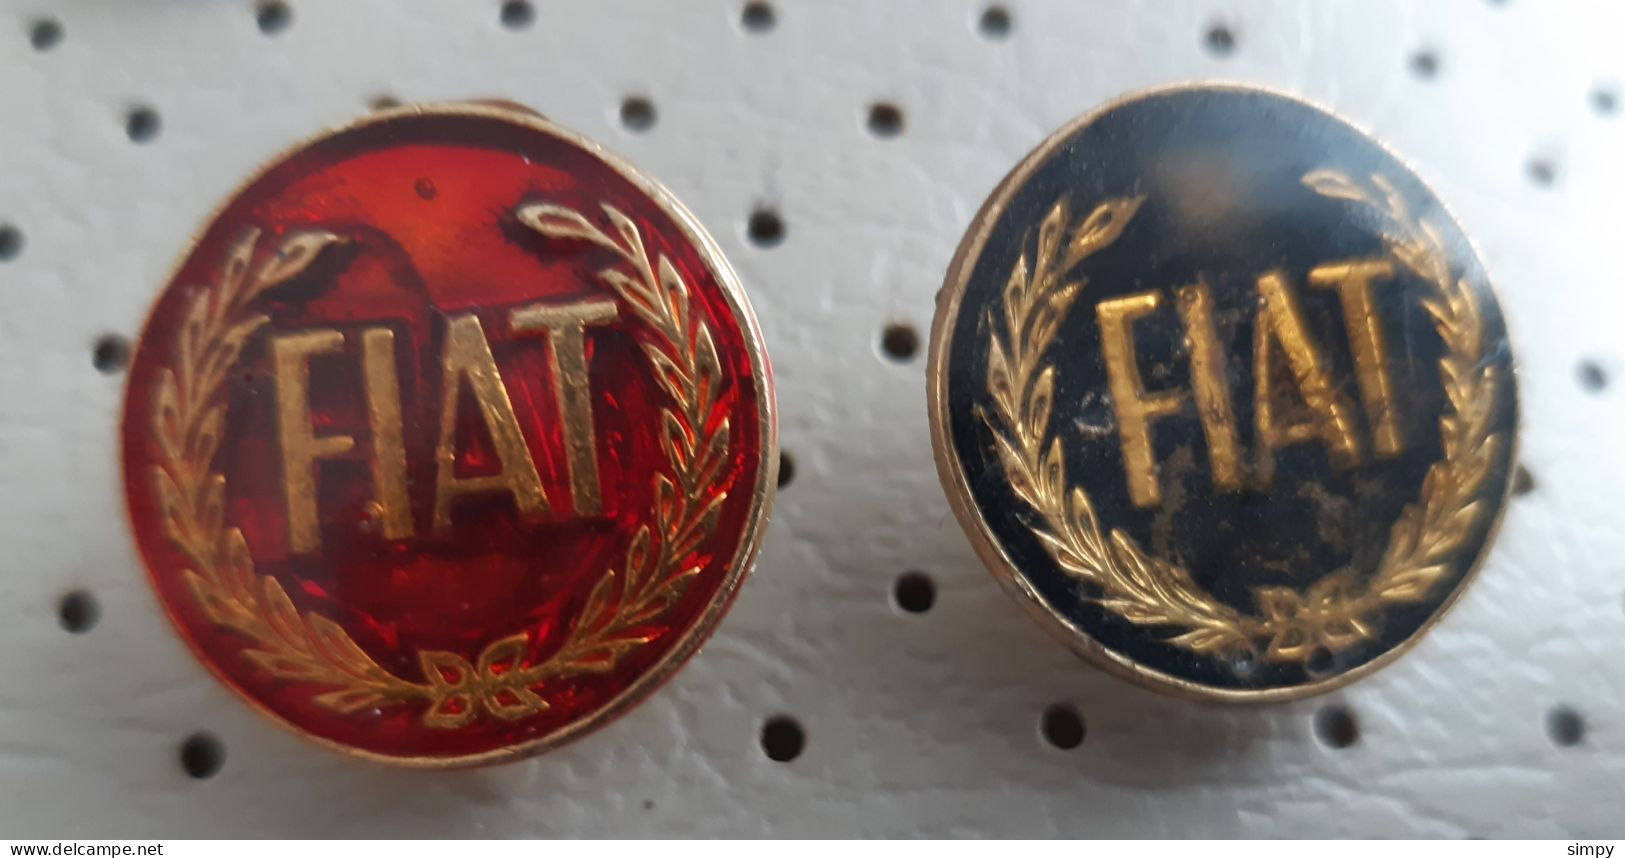 FIAT Car Logo  Vintage Pins Badge - Fiat